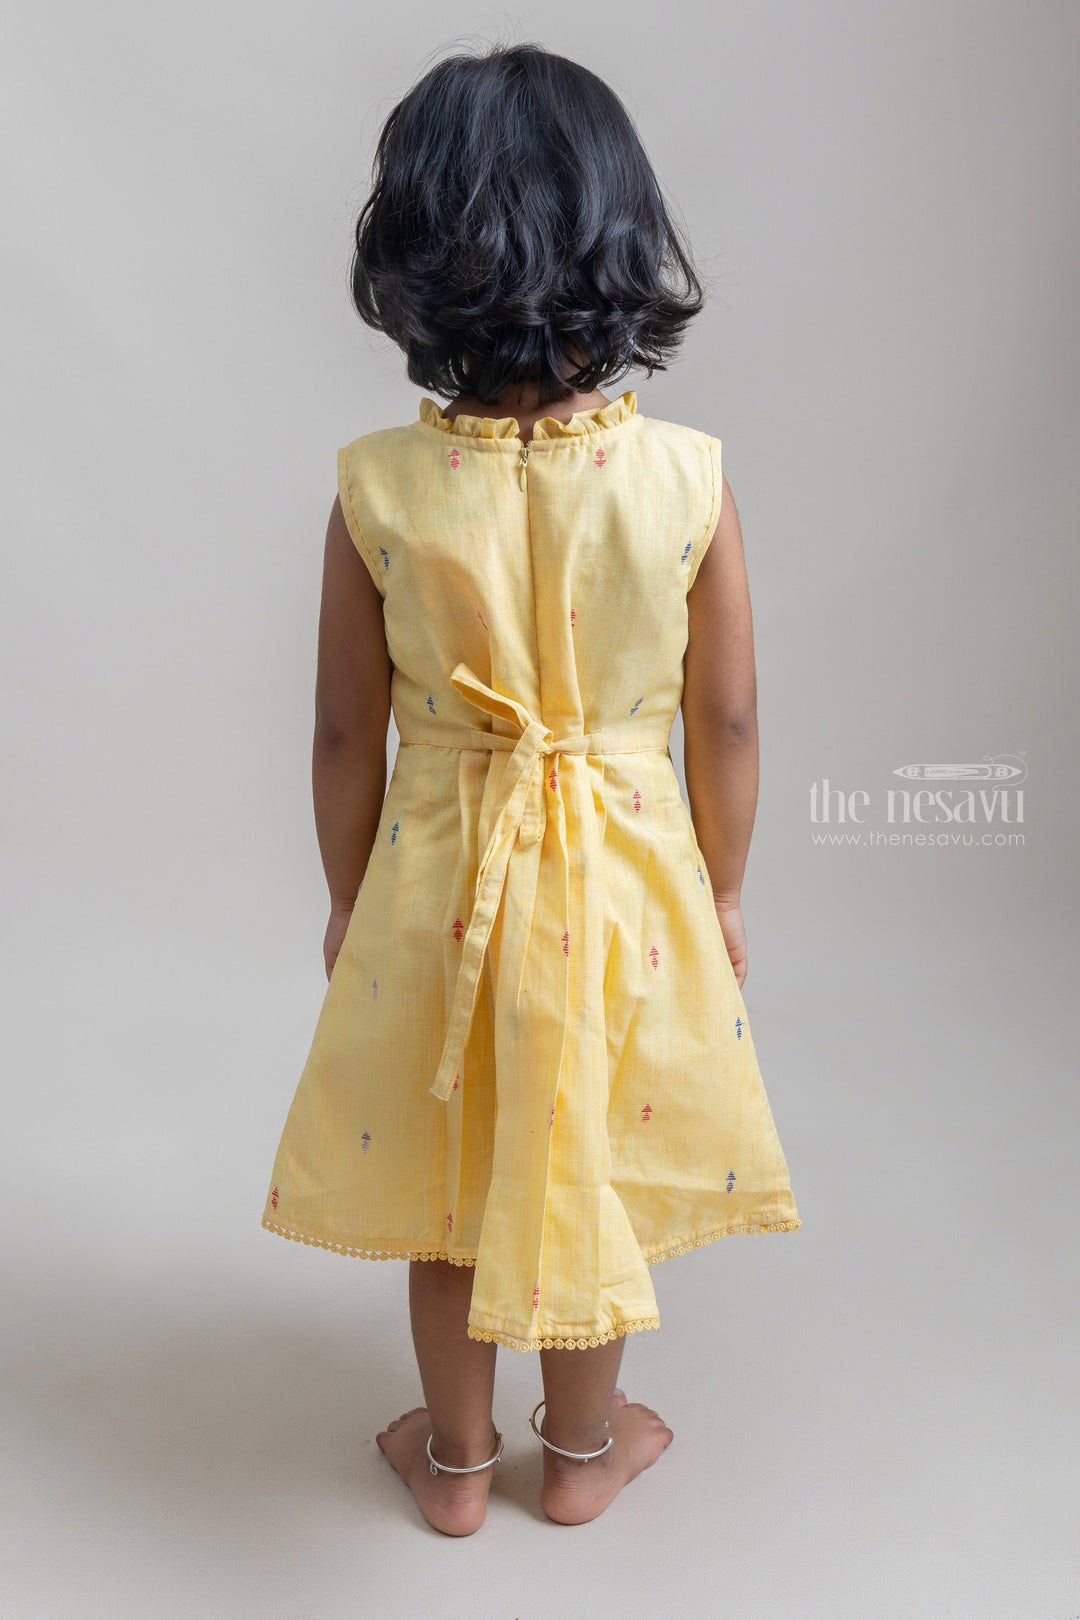 The Nesavu Frocks & Dresses Charming Yellow Sleeveless Pleated Casual Cotton Frock For Girls psr silks Nesavu